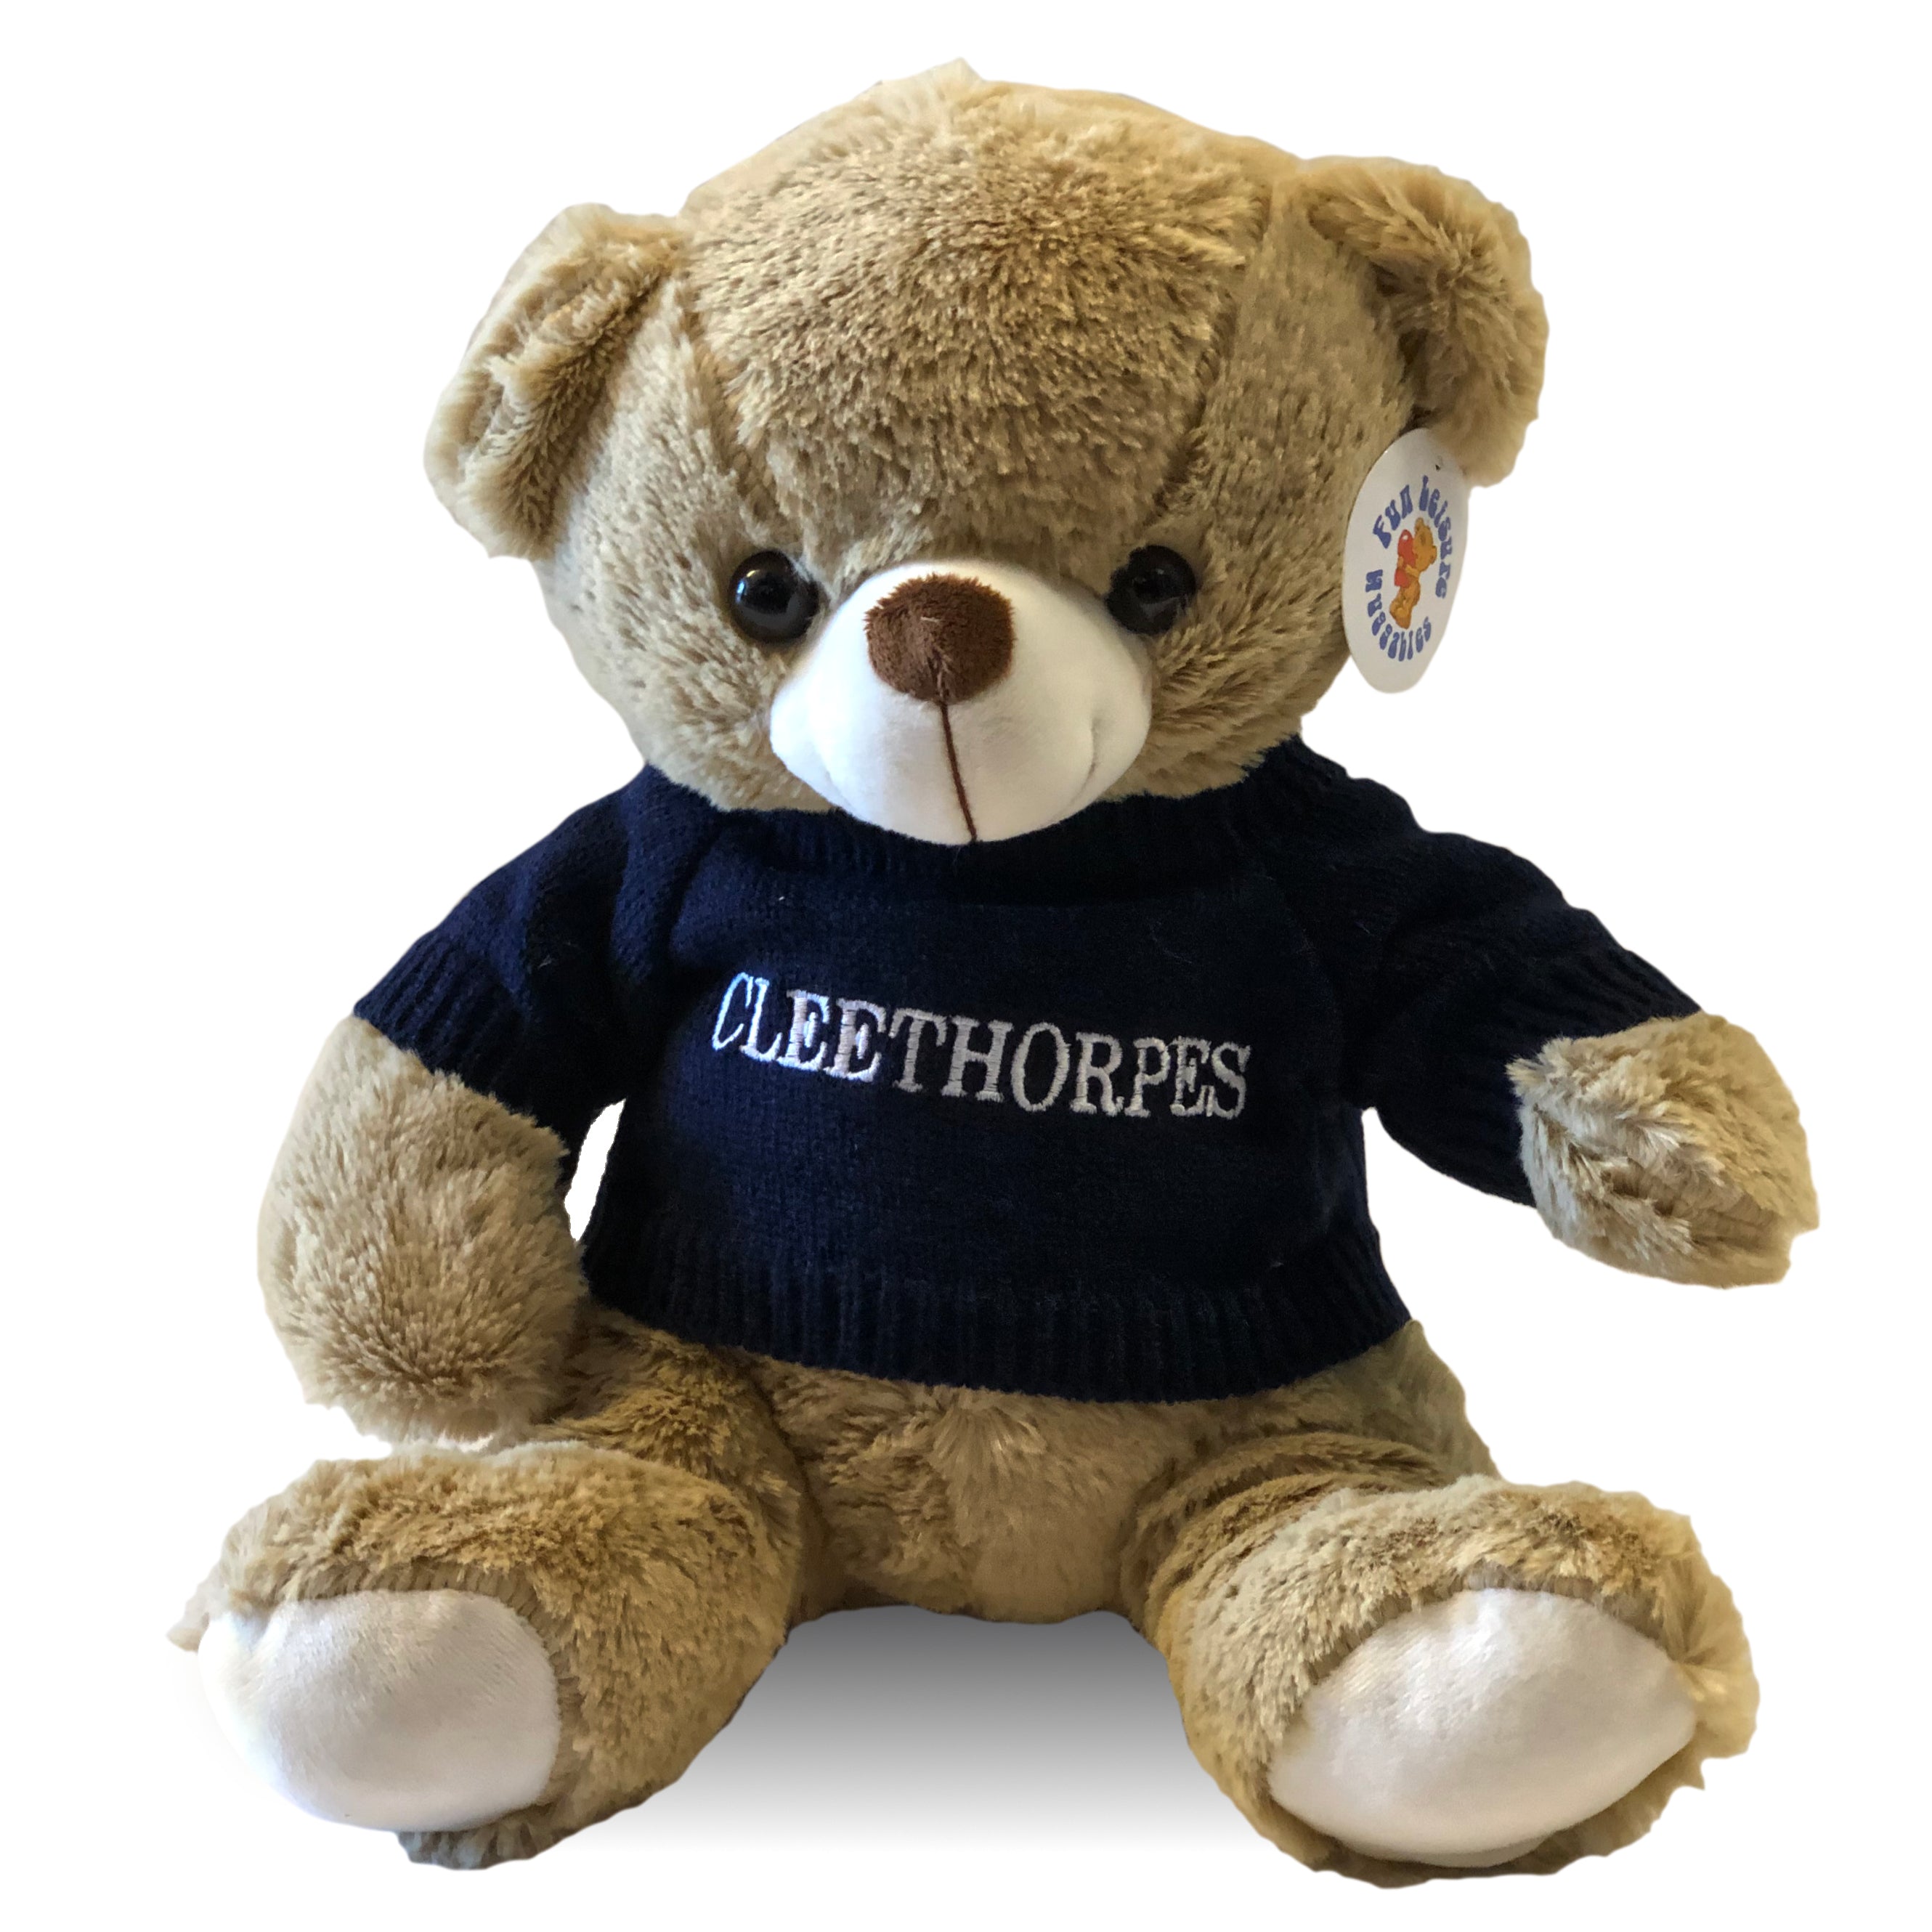 Cleethorpes Mascot Teddy Bear